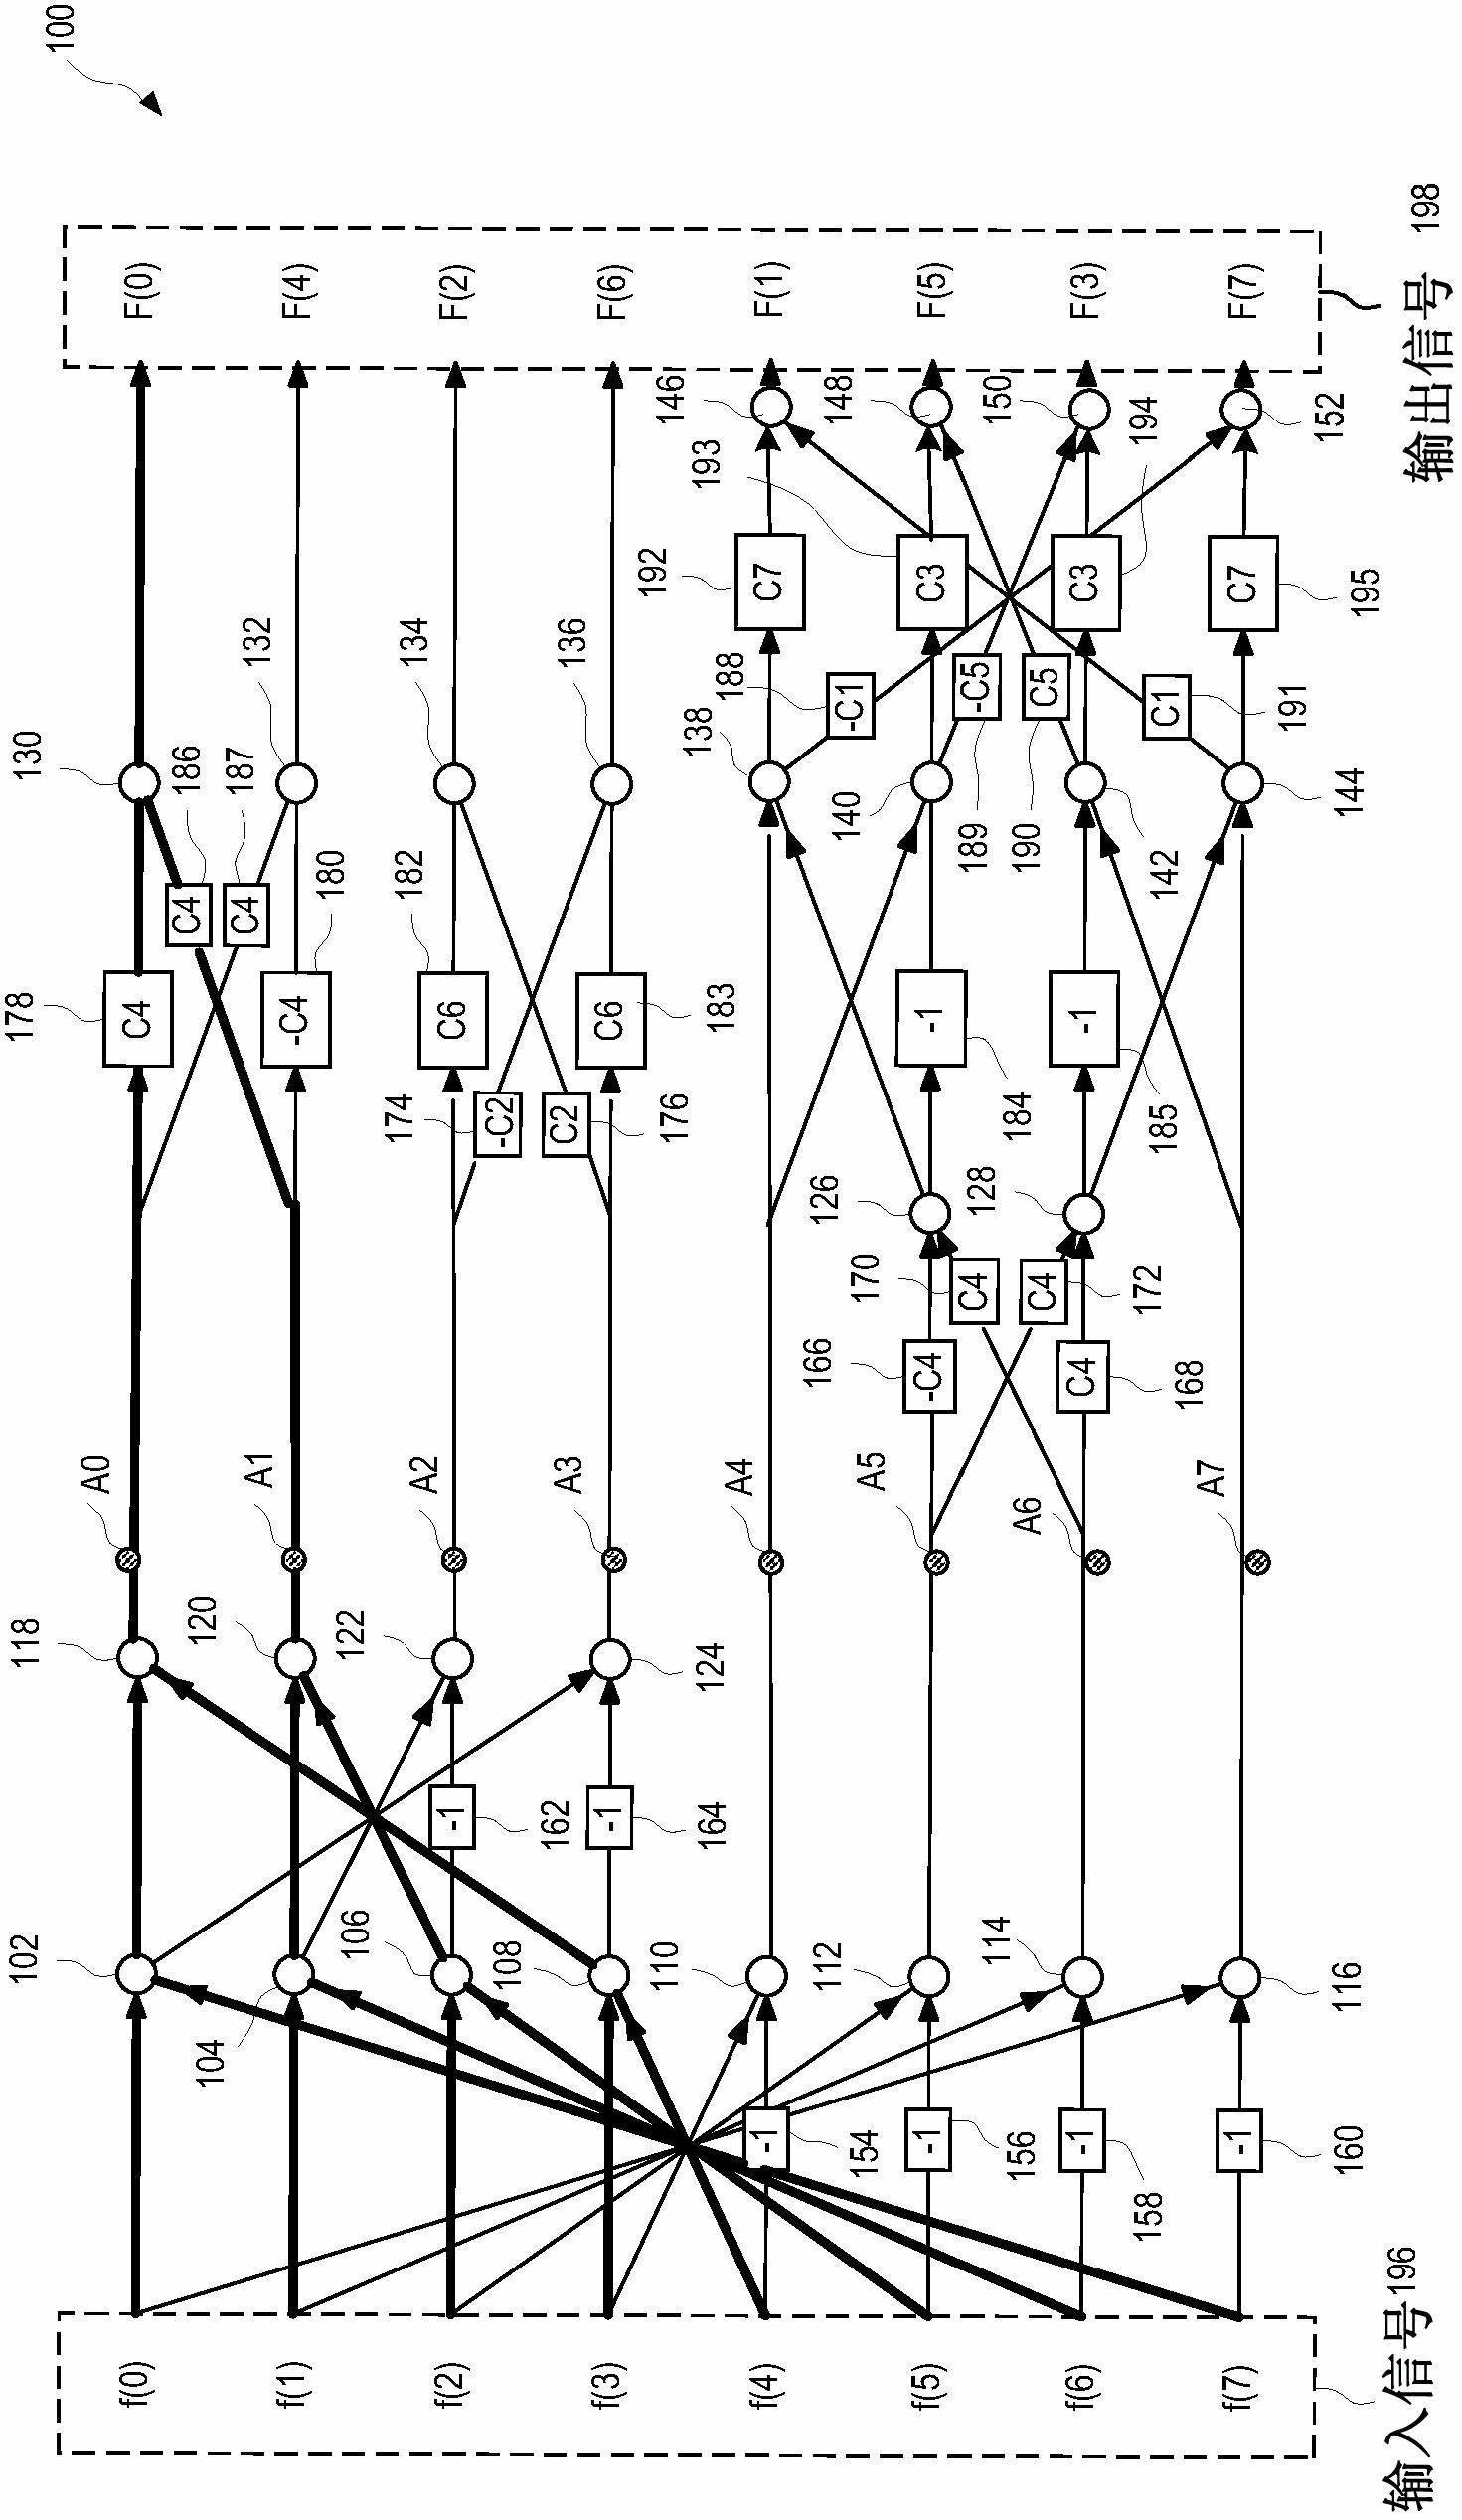 Circuits for shared flow graph based discrete cosine transform